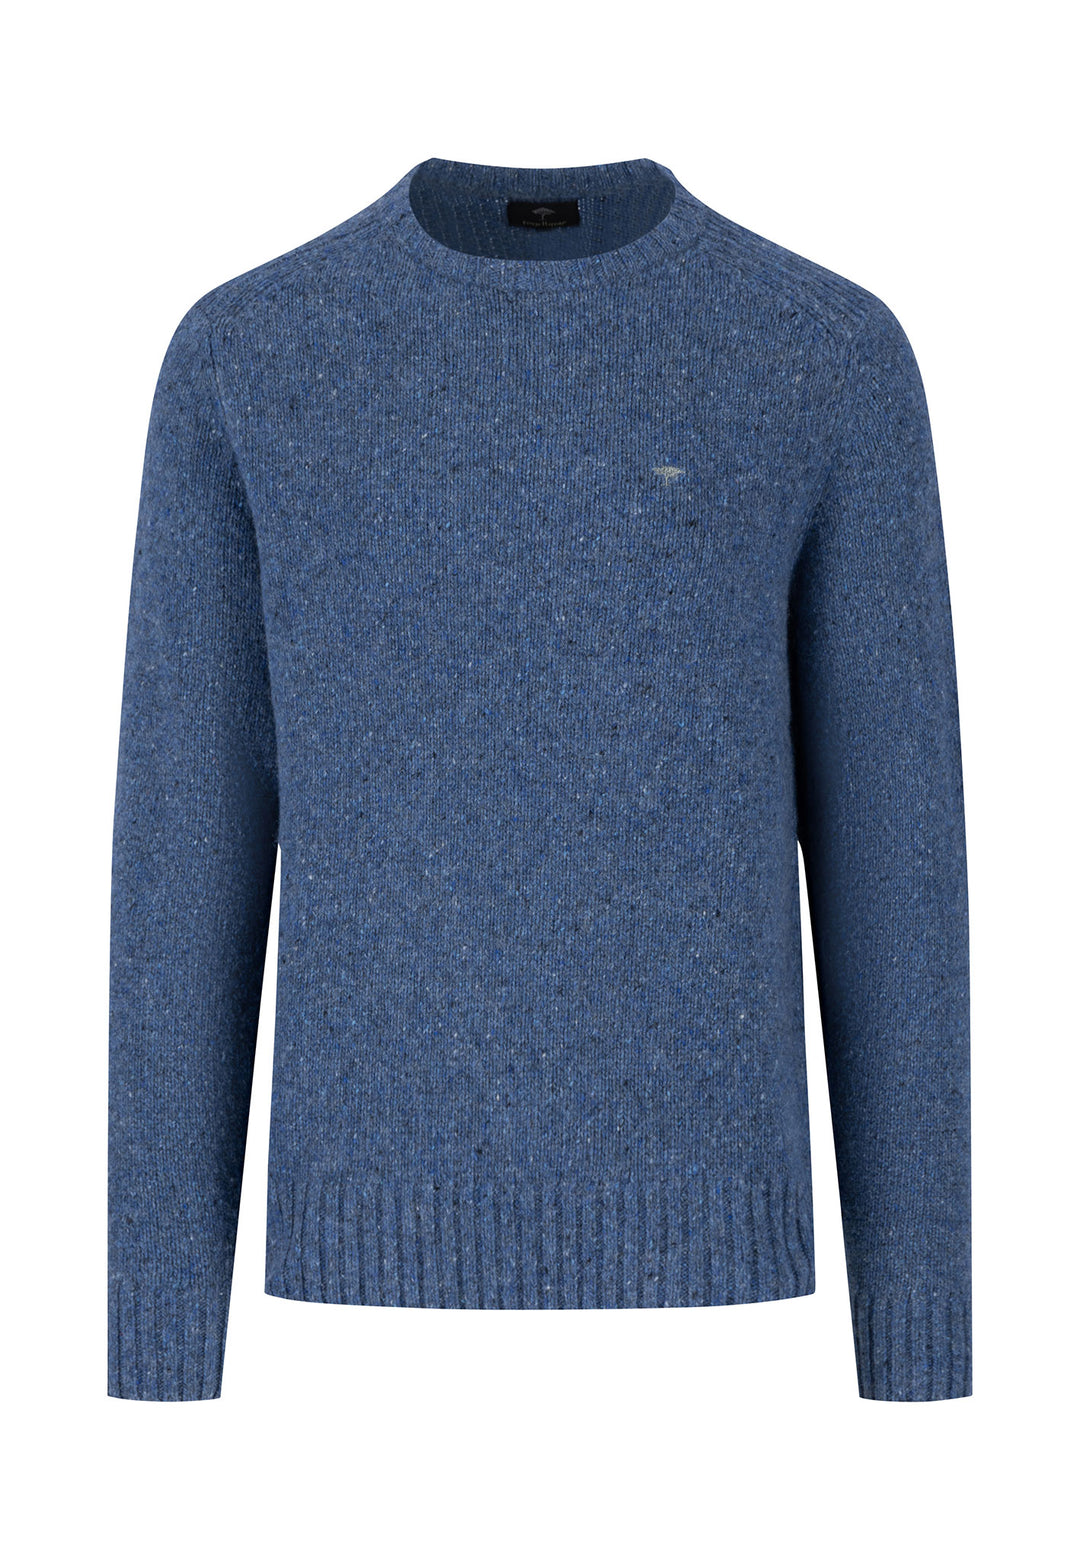 Pullover aus Donegal-Strick – FYNCH-HATTON | Offizieller Online Shop